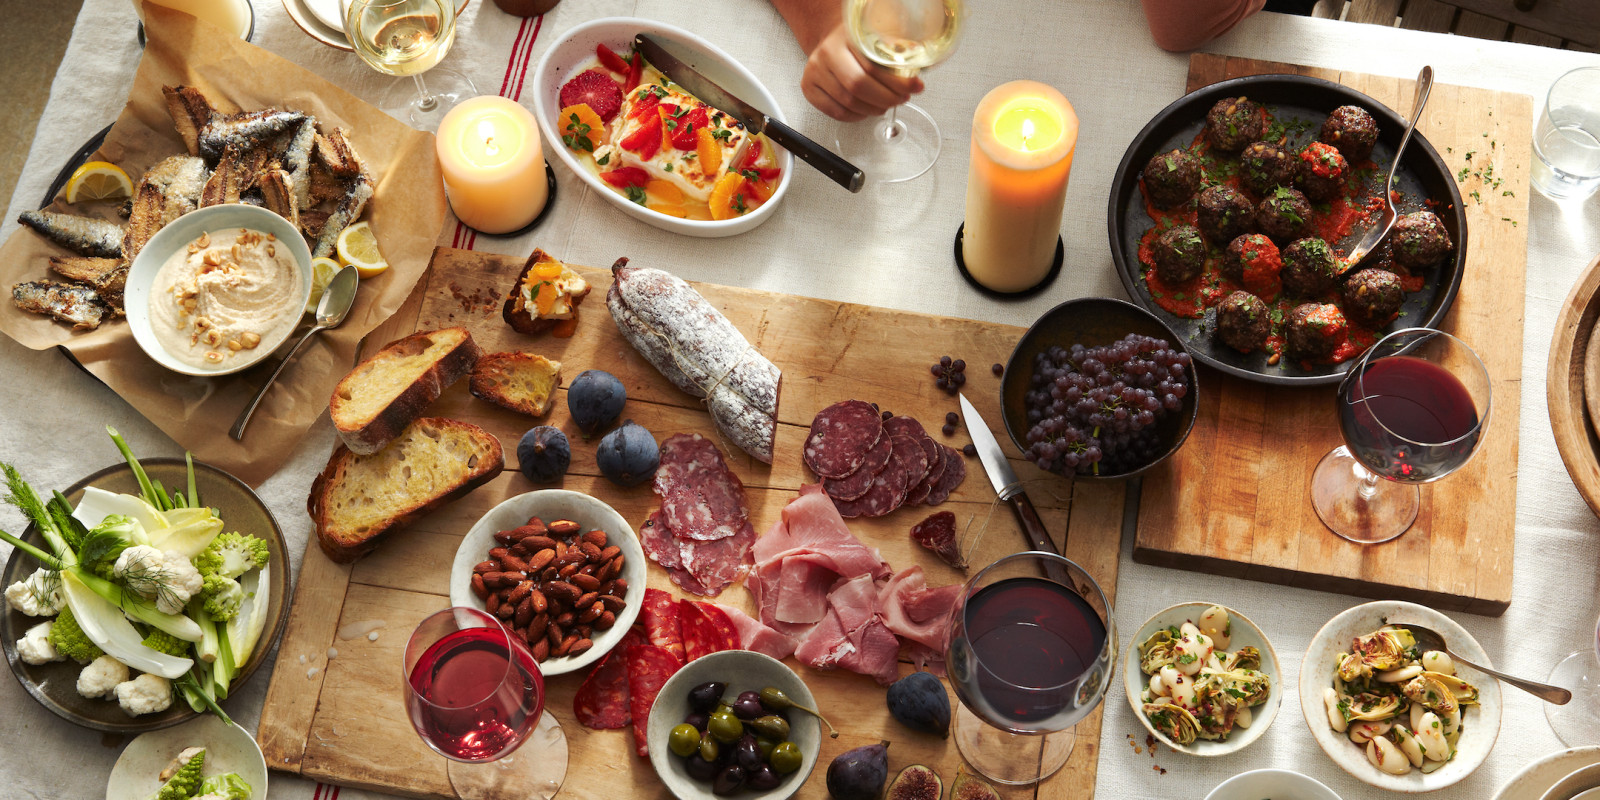 Italian Dinner Menu Ideas
 How to Host an Instagram Worthy Italian Dinner Party